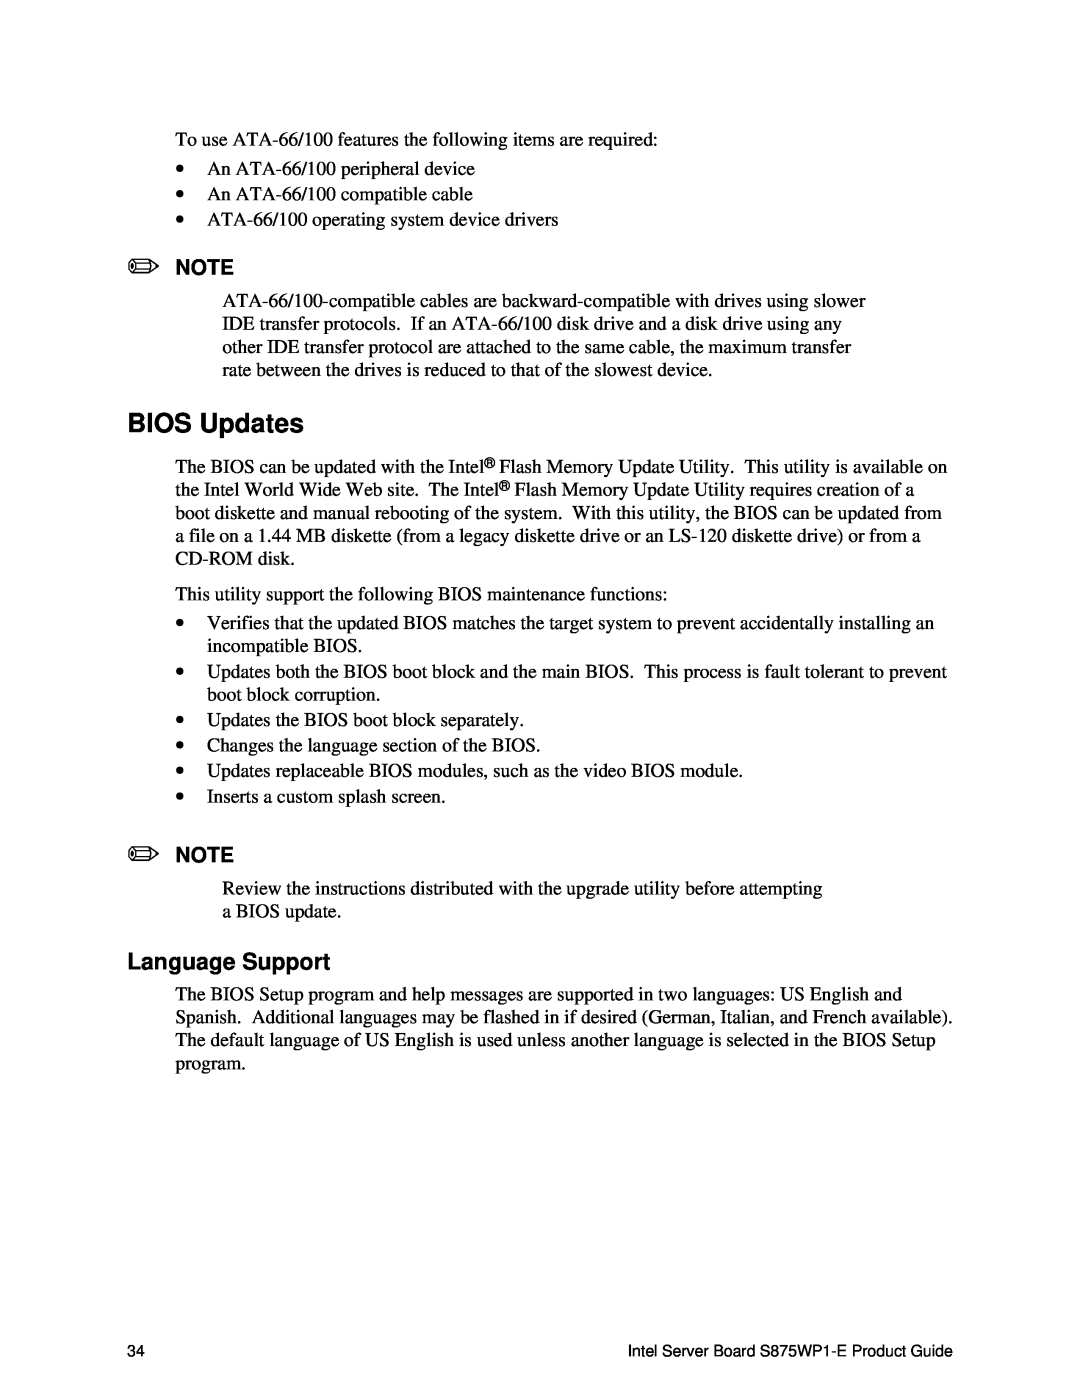 Intel S875WP1-E manual BIOS Updates, Language Support 